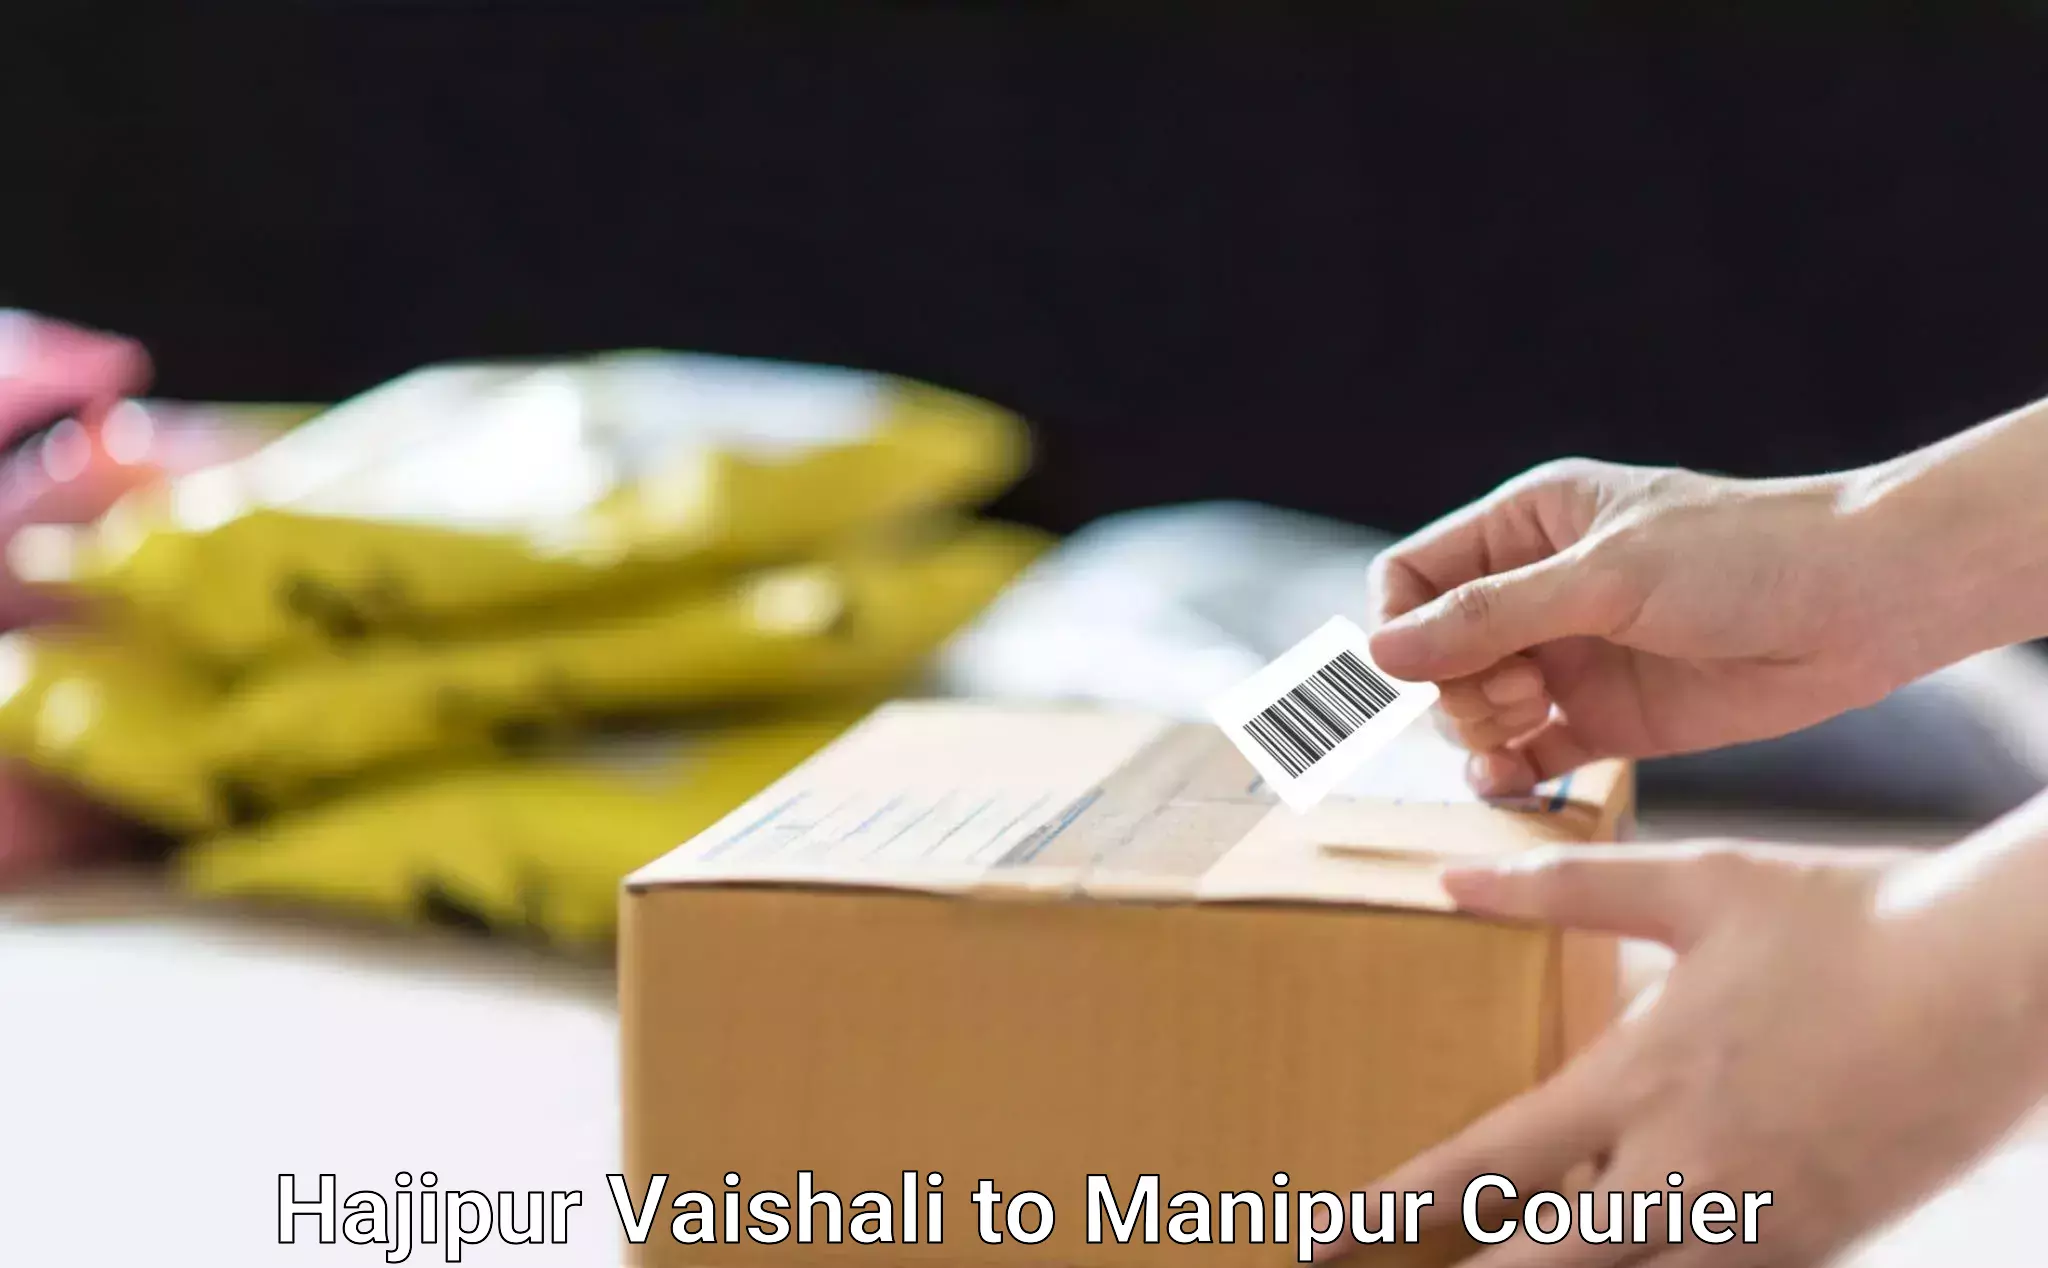 Professional moving company Hajipur Vaishali to Thoubal